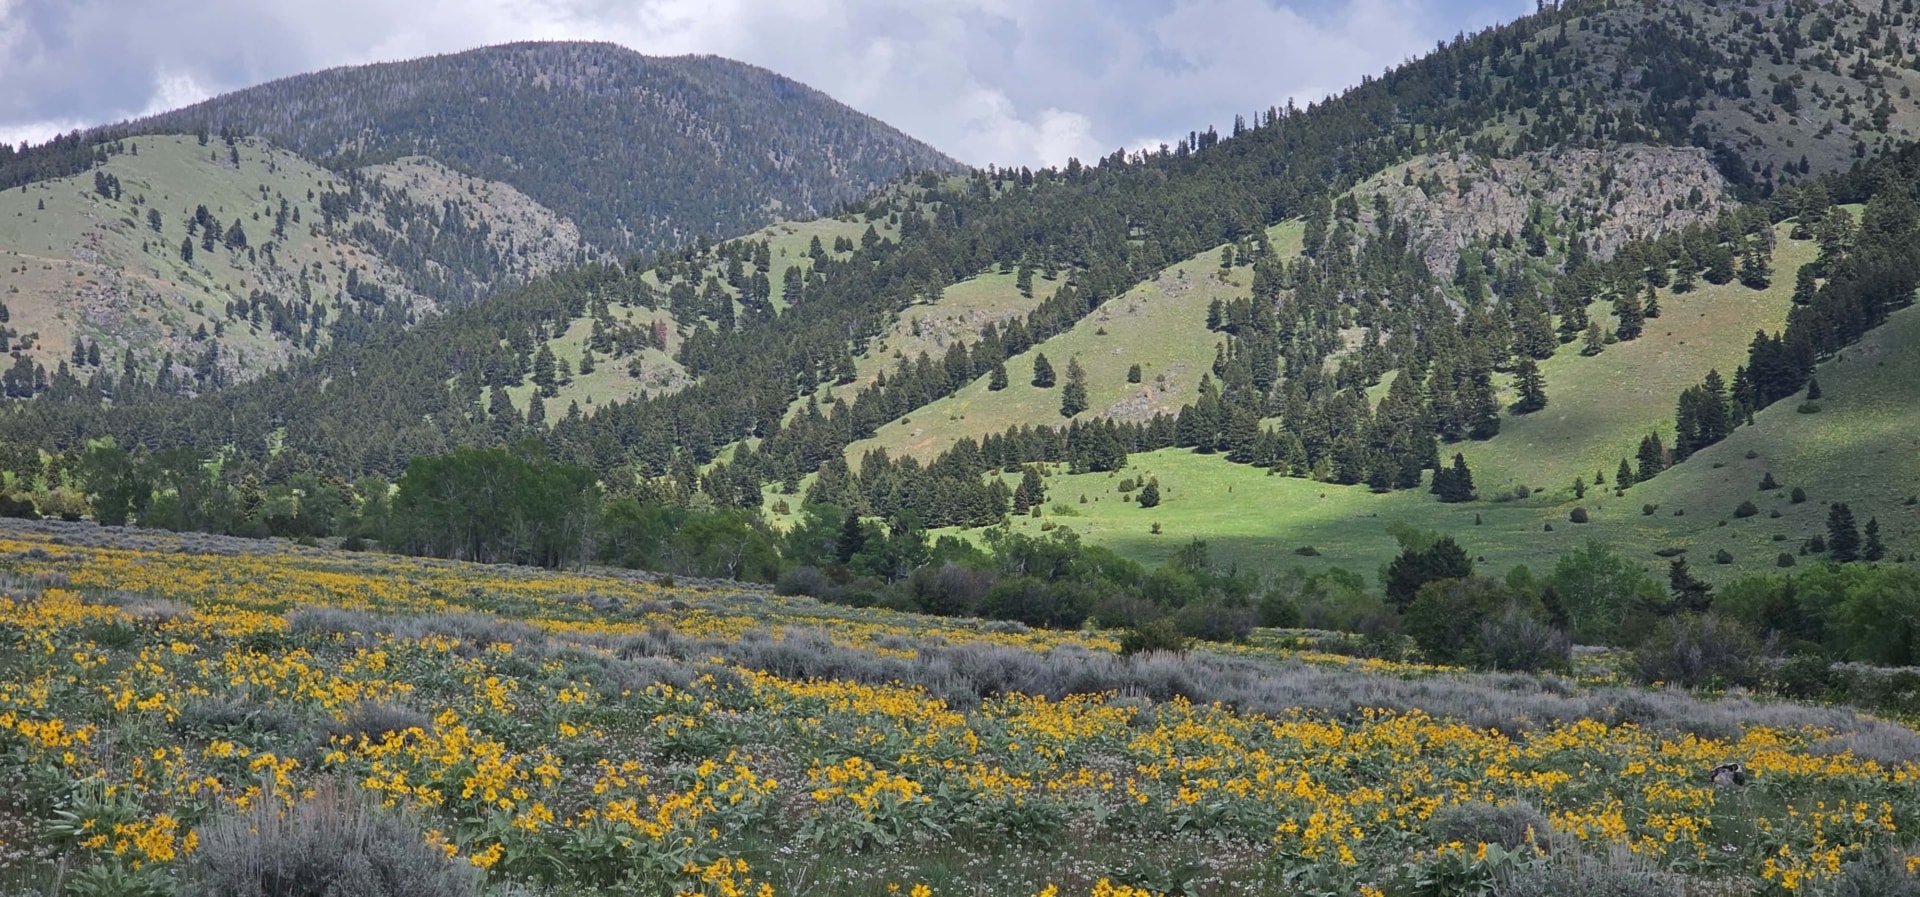 bear creek flowers montana gallatin valley overlook